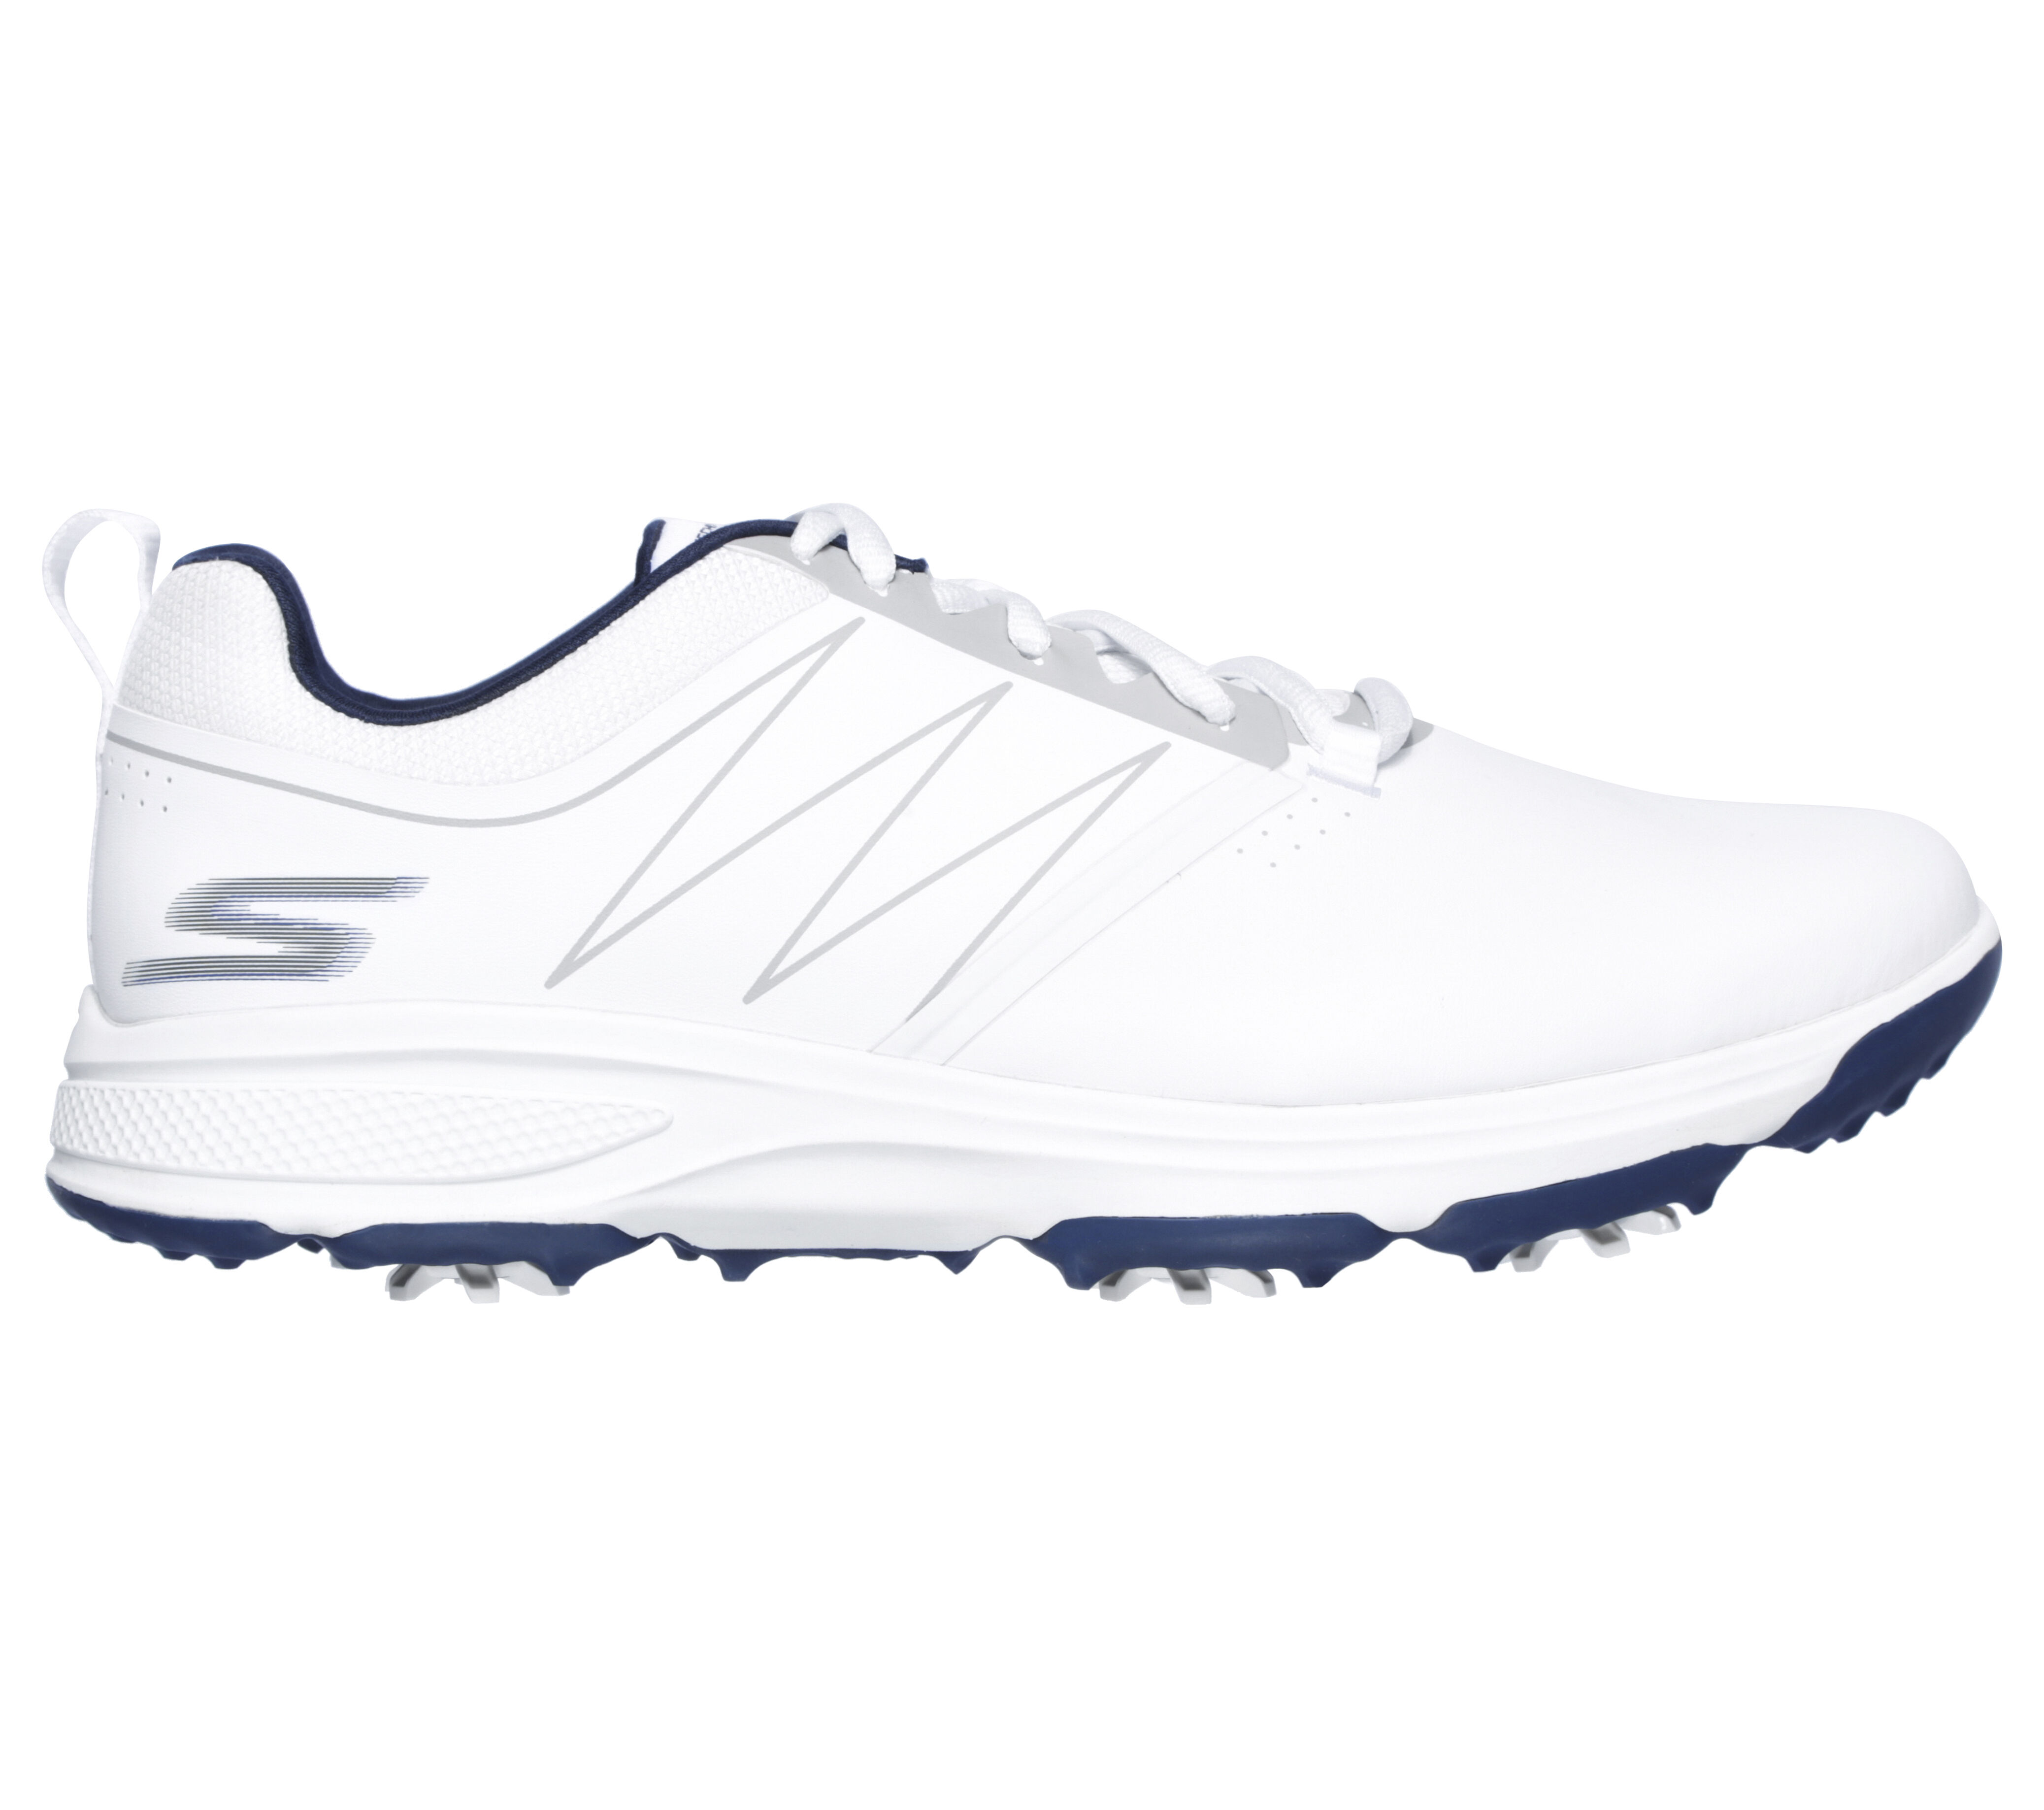 skechers golf shoes 2015